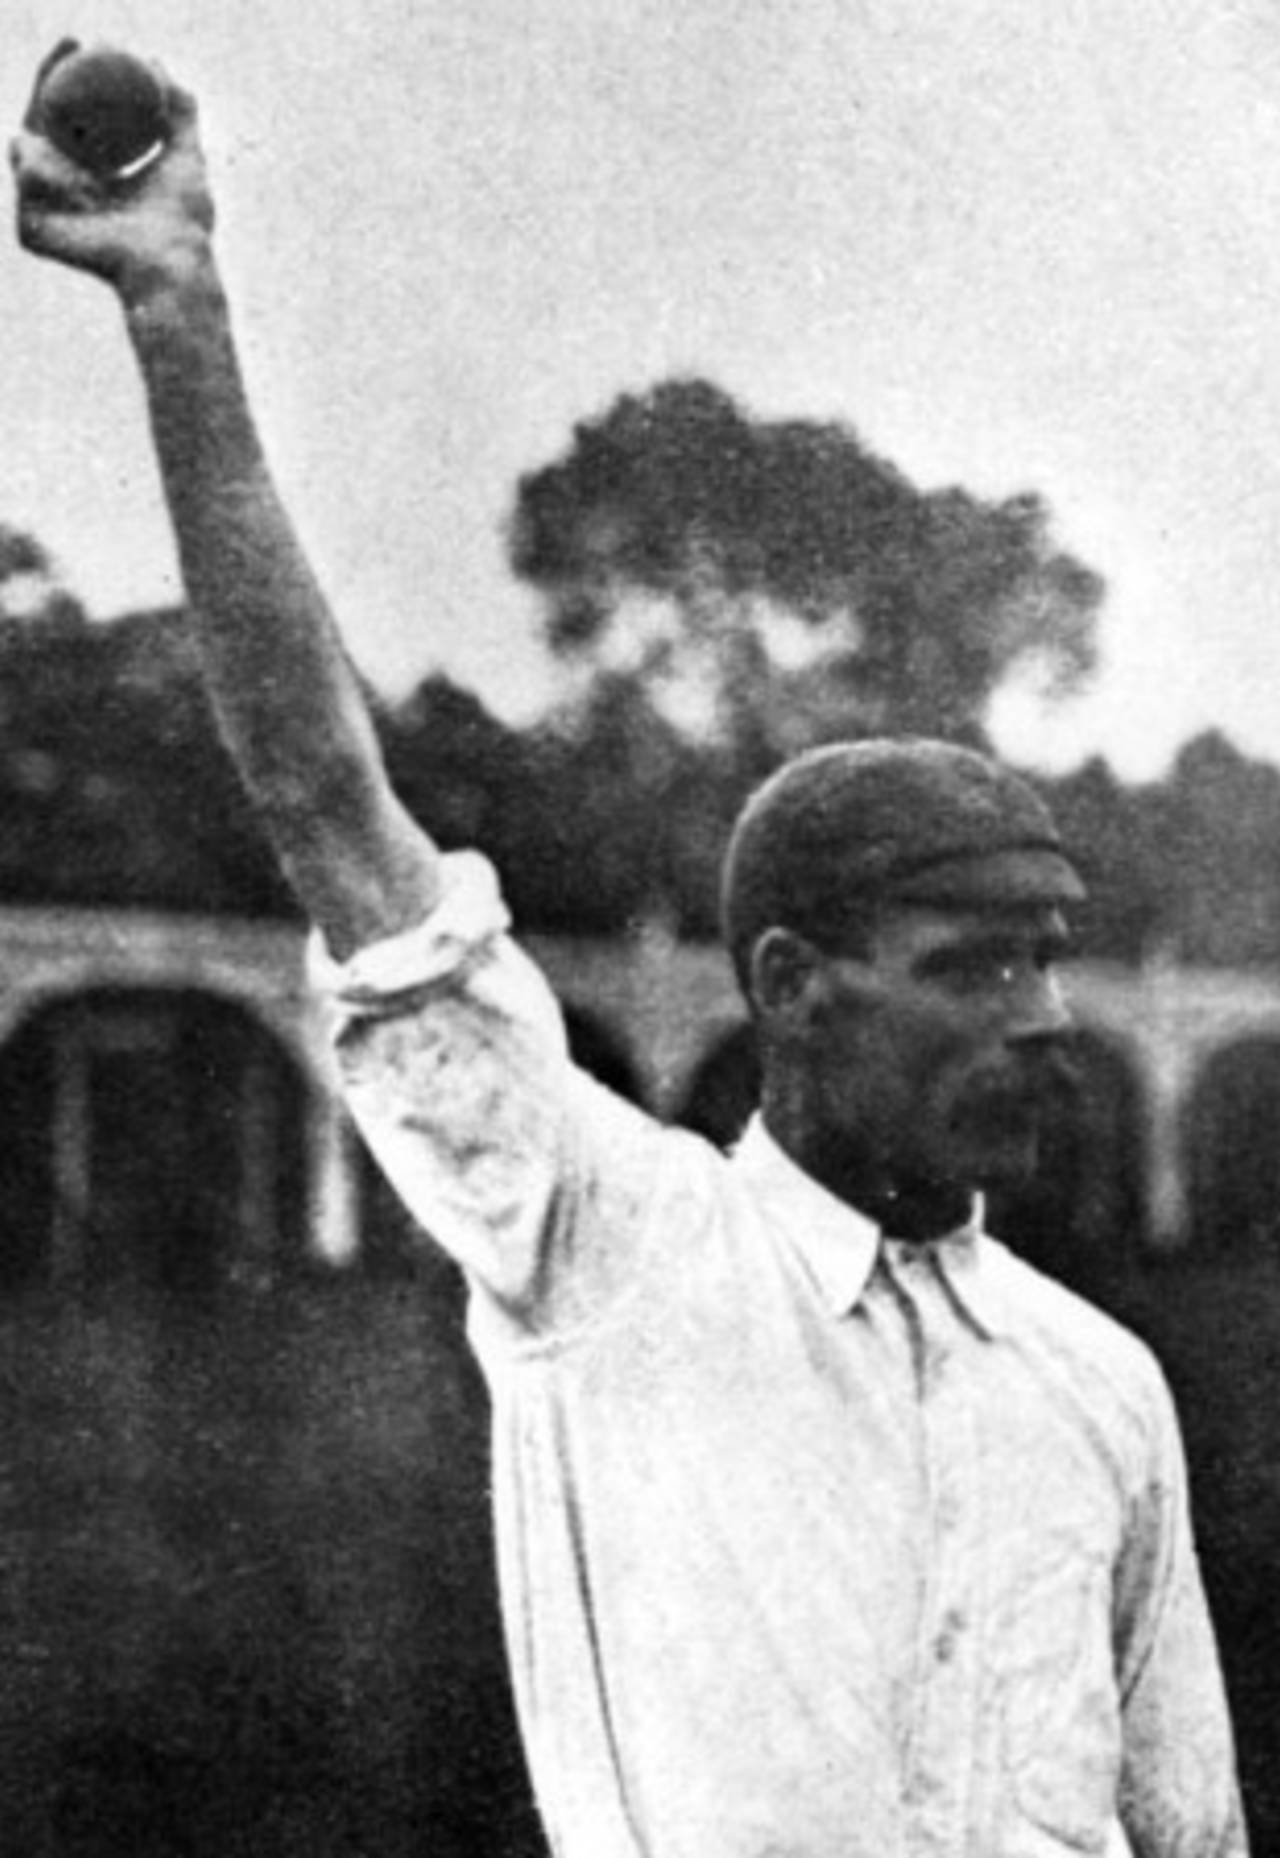 Sydney Barnes demonstrates his bowling action, circa 1920 